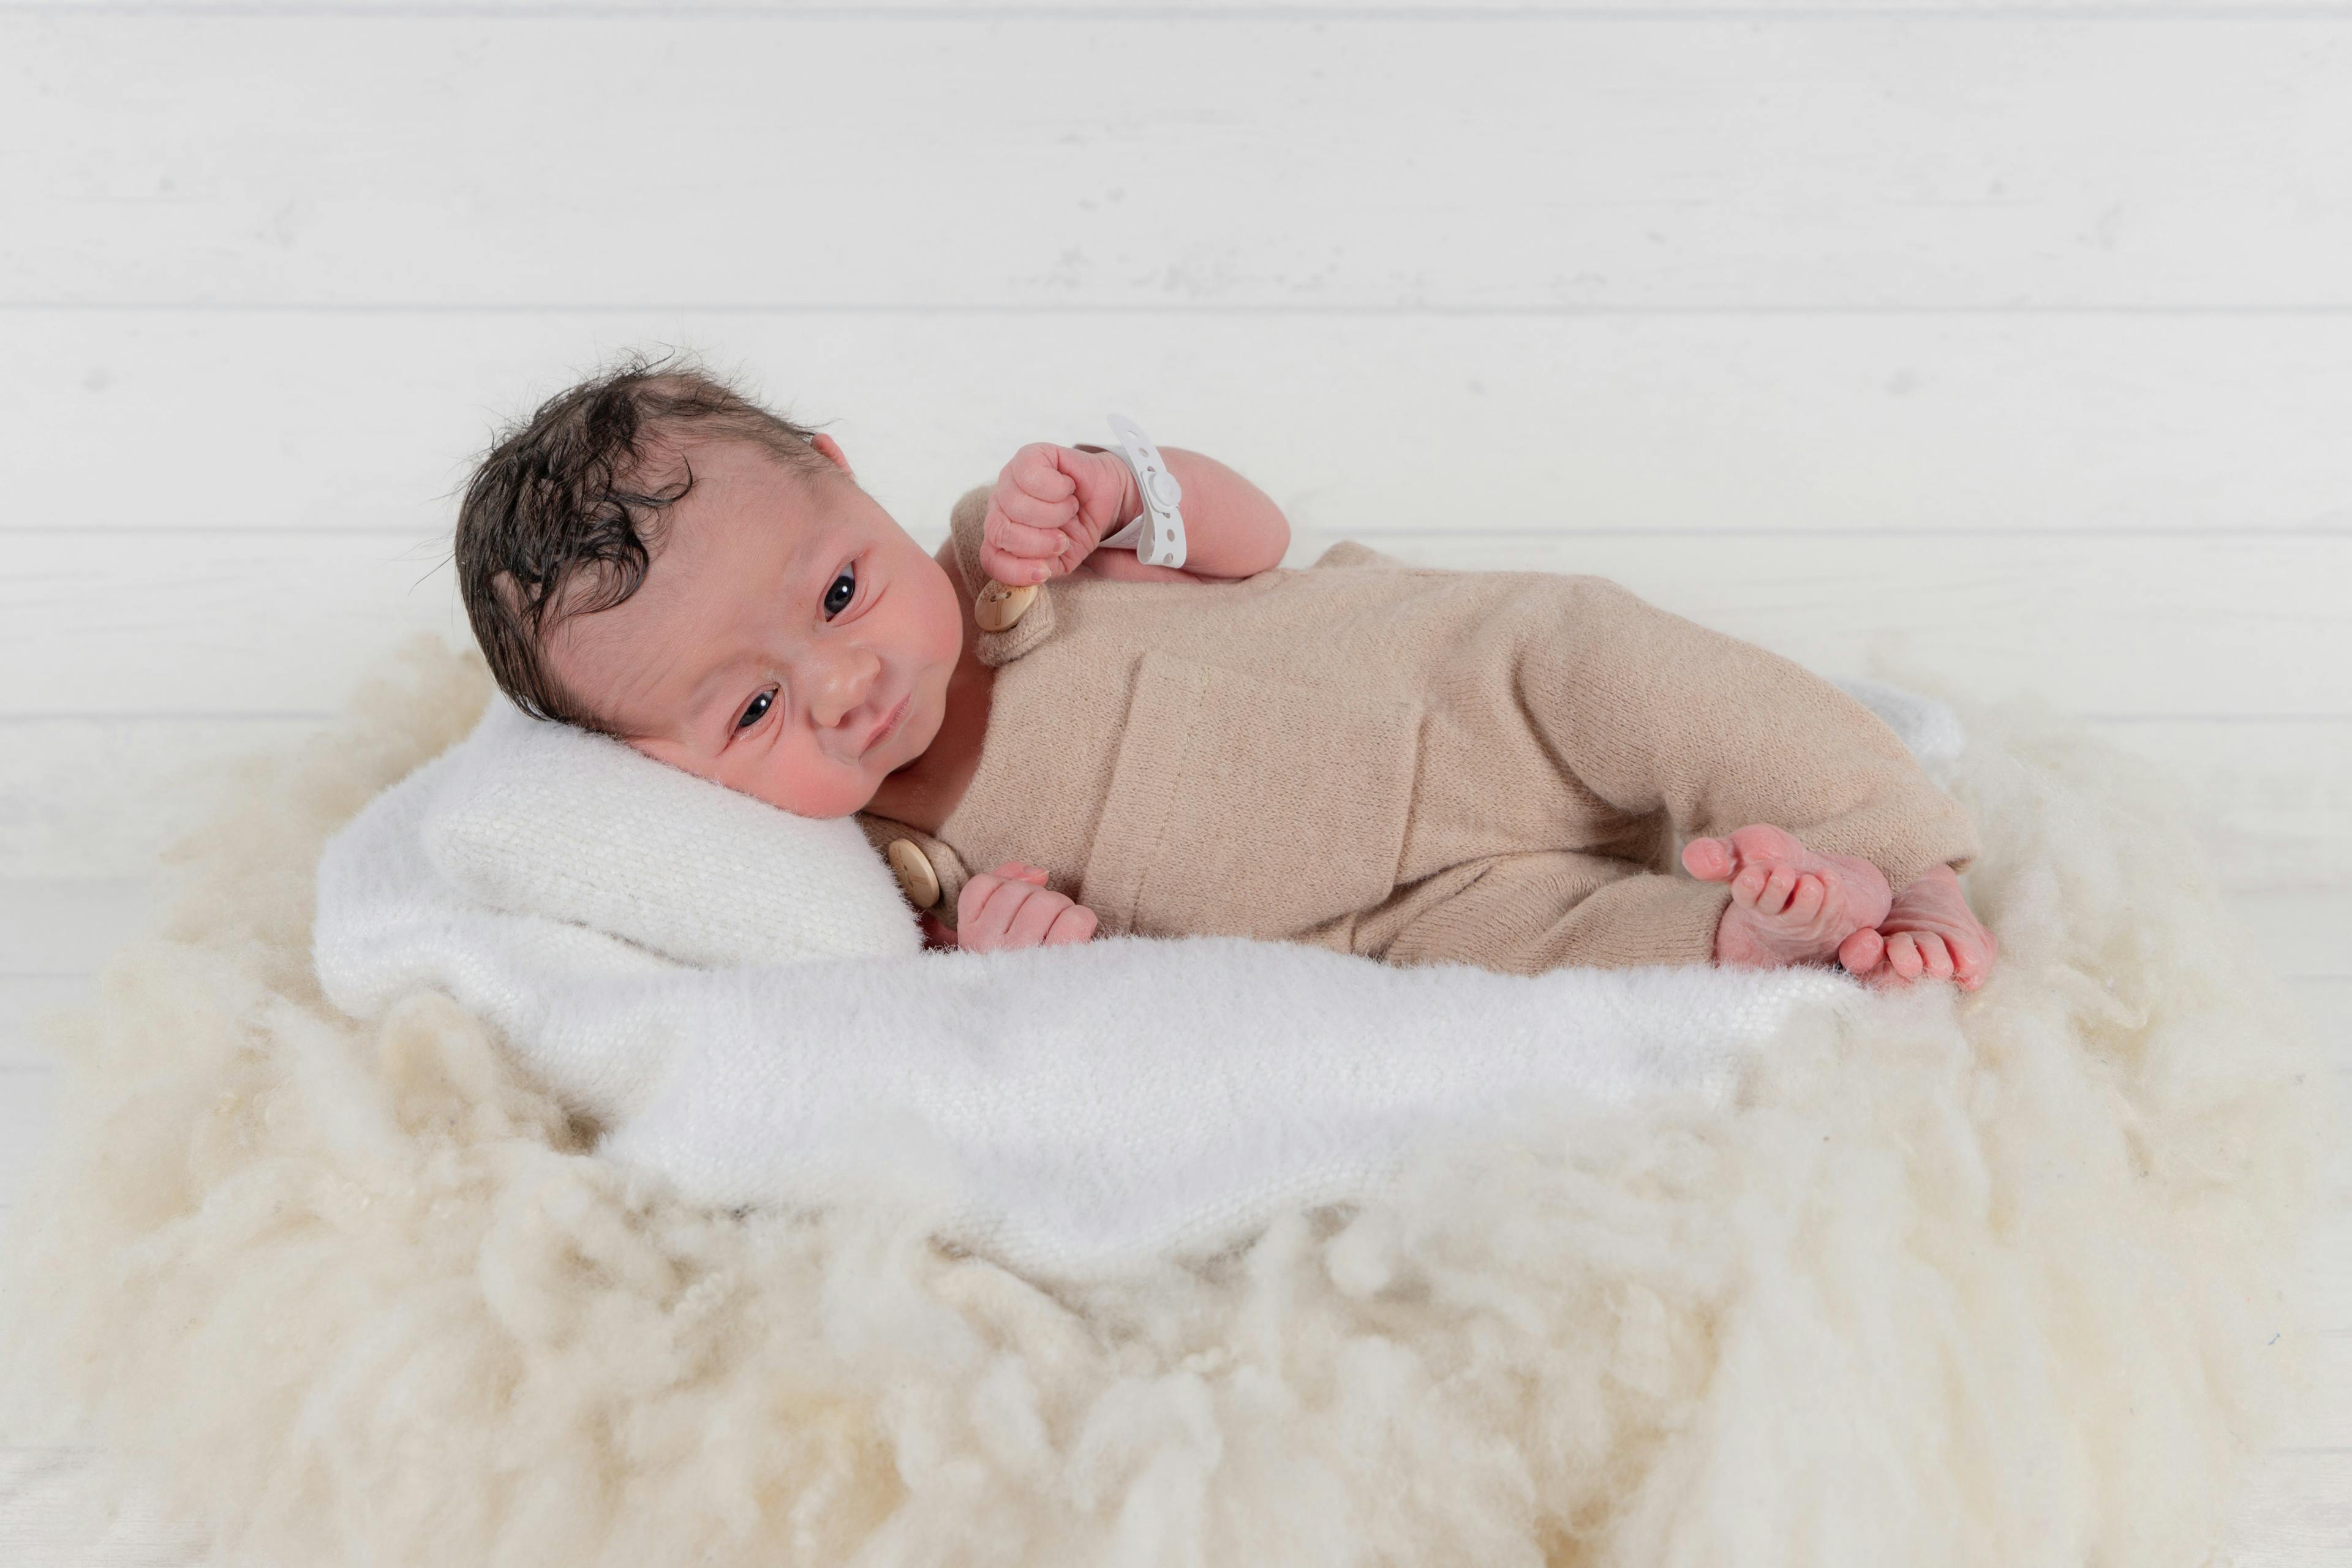 Newborn baby on a soft blanket with beige romper.